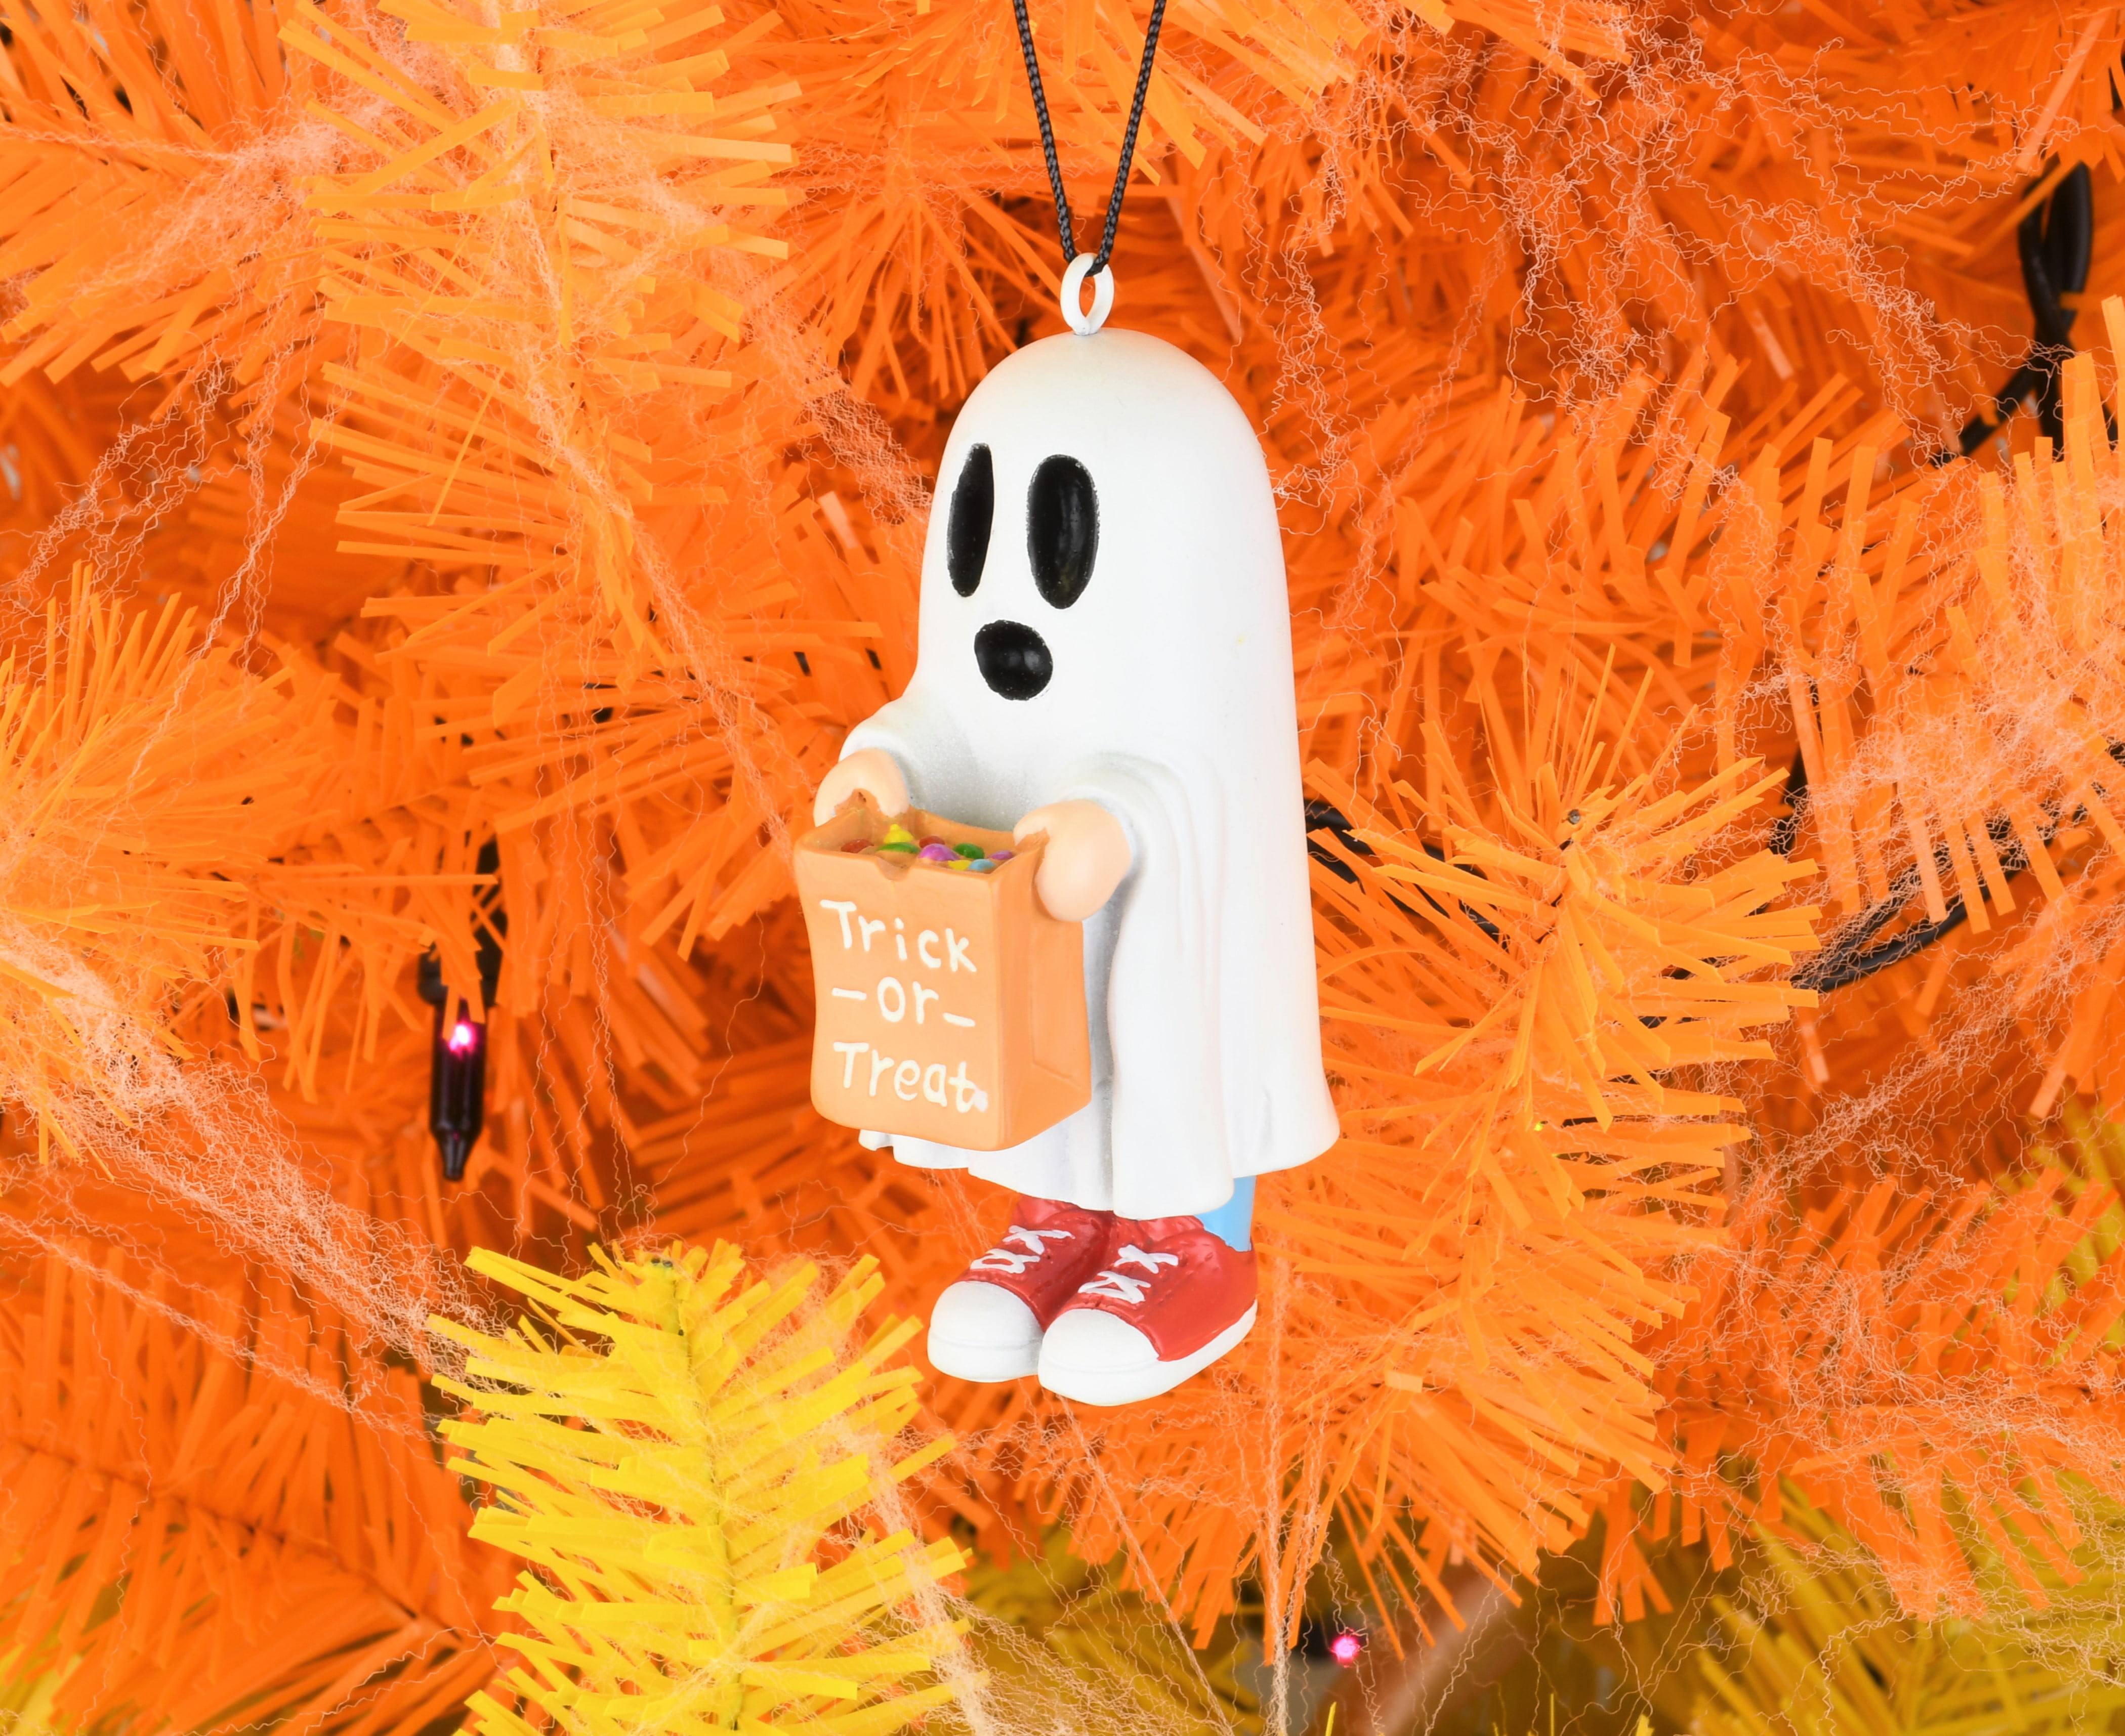 Tree Buddees Kid Trick or Treating Ghost Costume Halloween Christmas Ornament